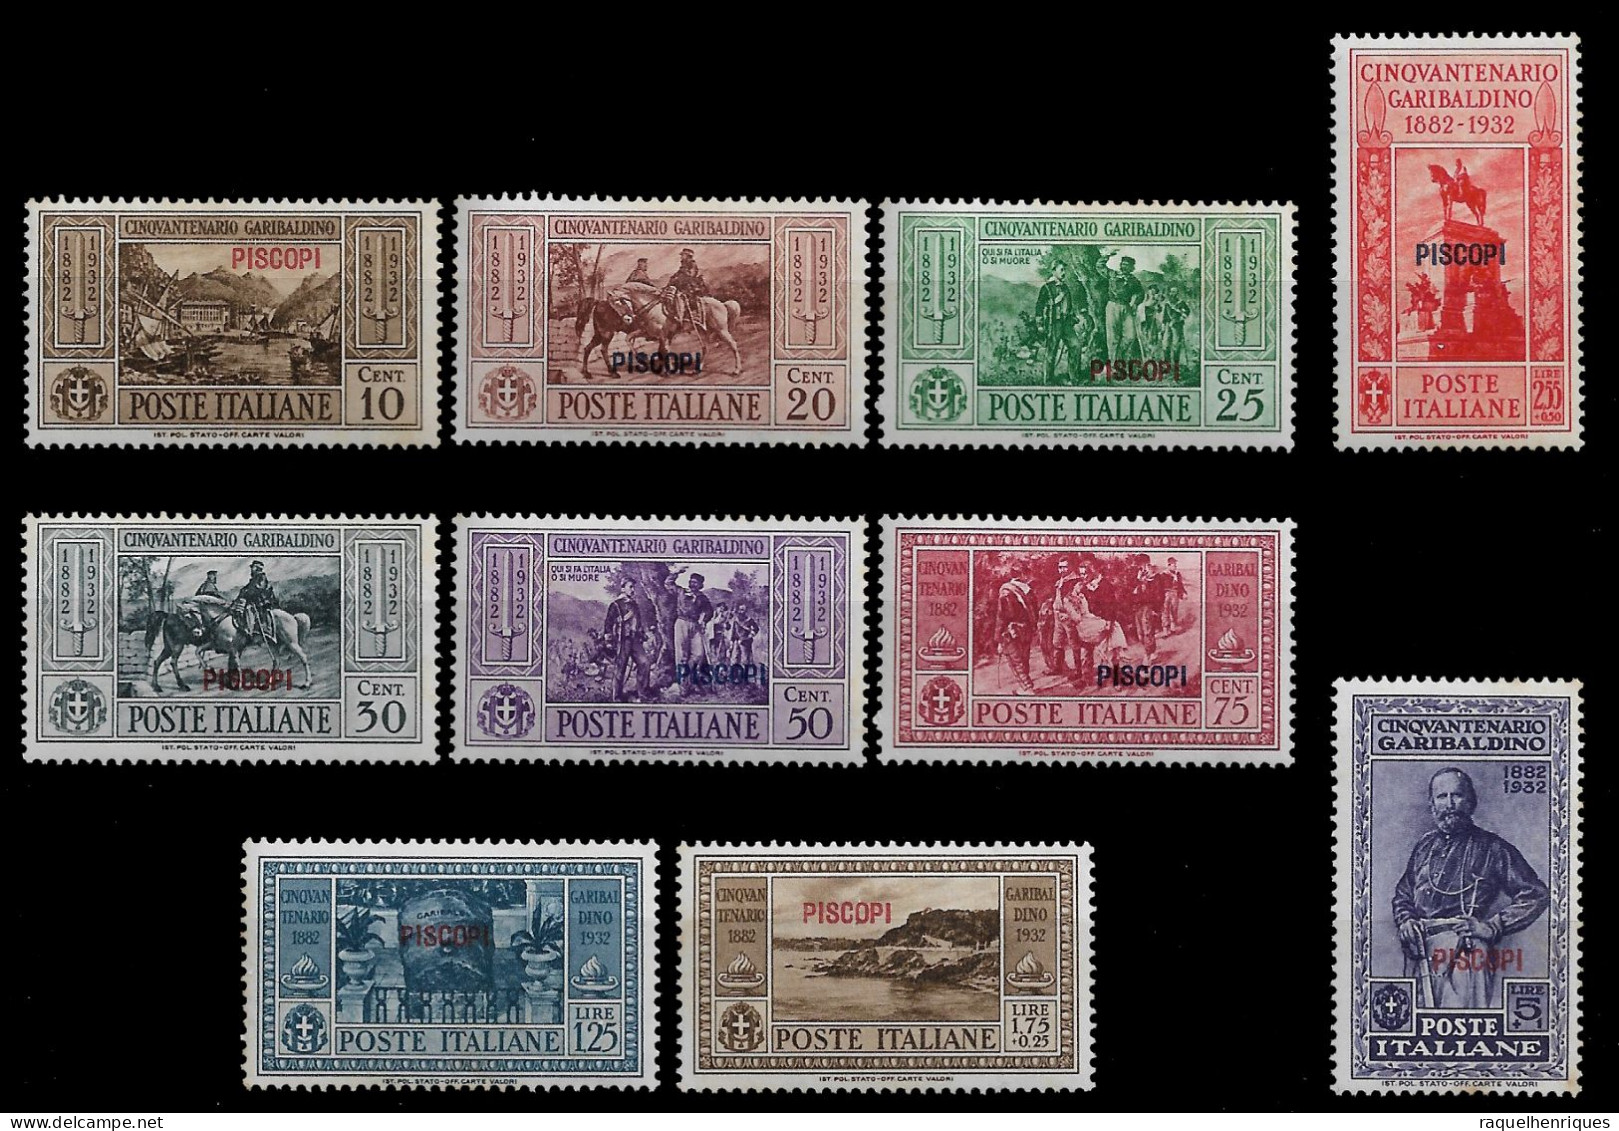 Postage Stamps Of Italian Colonies - PISCOPI 1932 Giuseppe Garibaldi SET MNH (BA5#399) - Egeo (Piscopi)